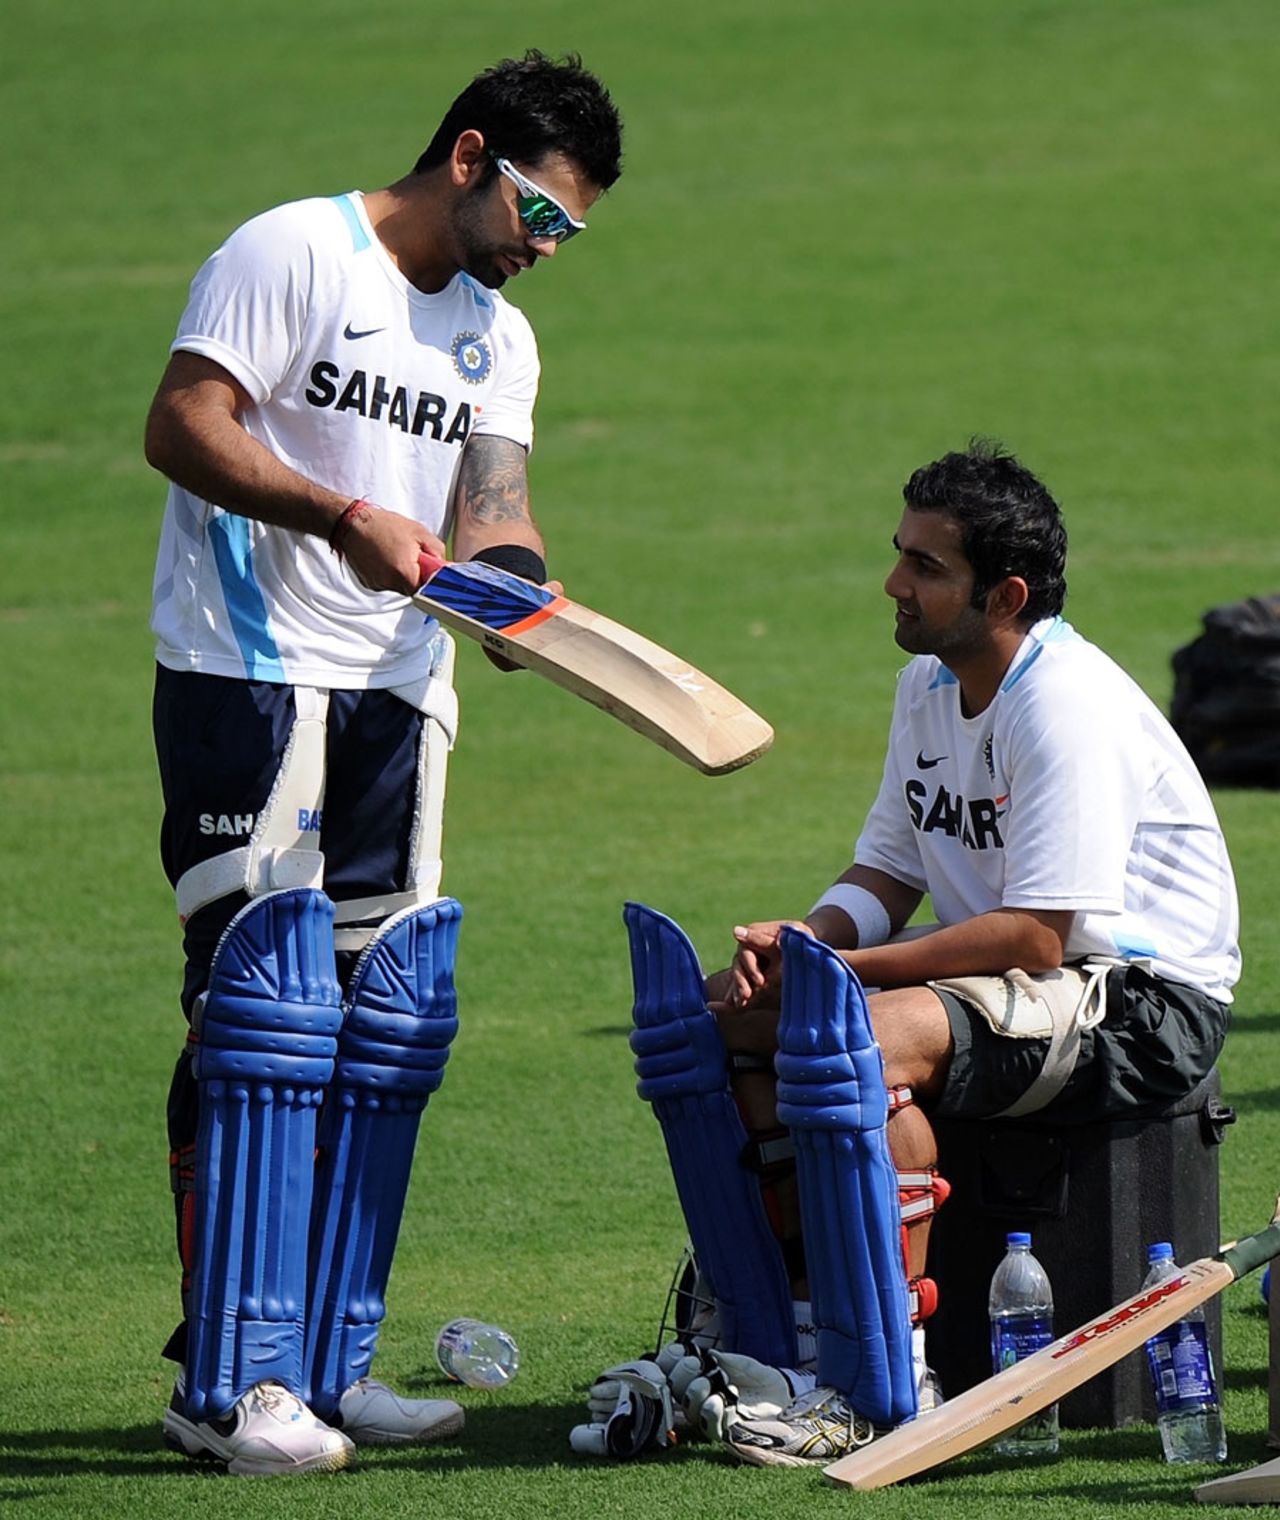 Virat Kohli has a chat with Gautam Gambhir during practice, Indore, December 7, 2011